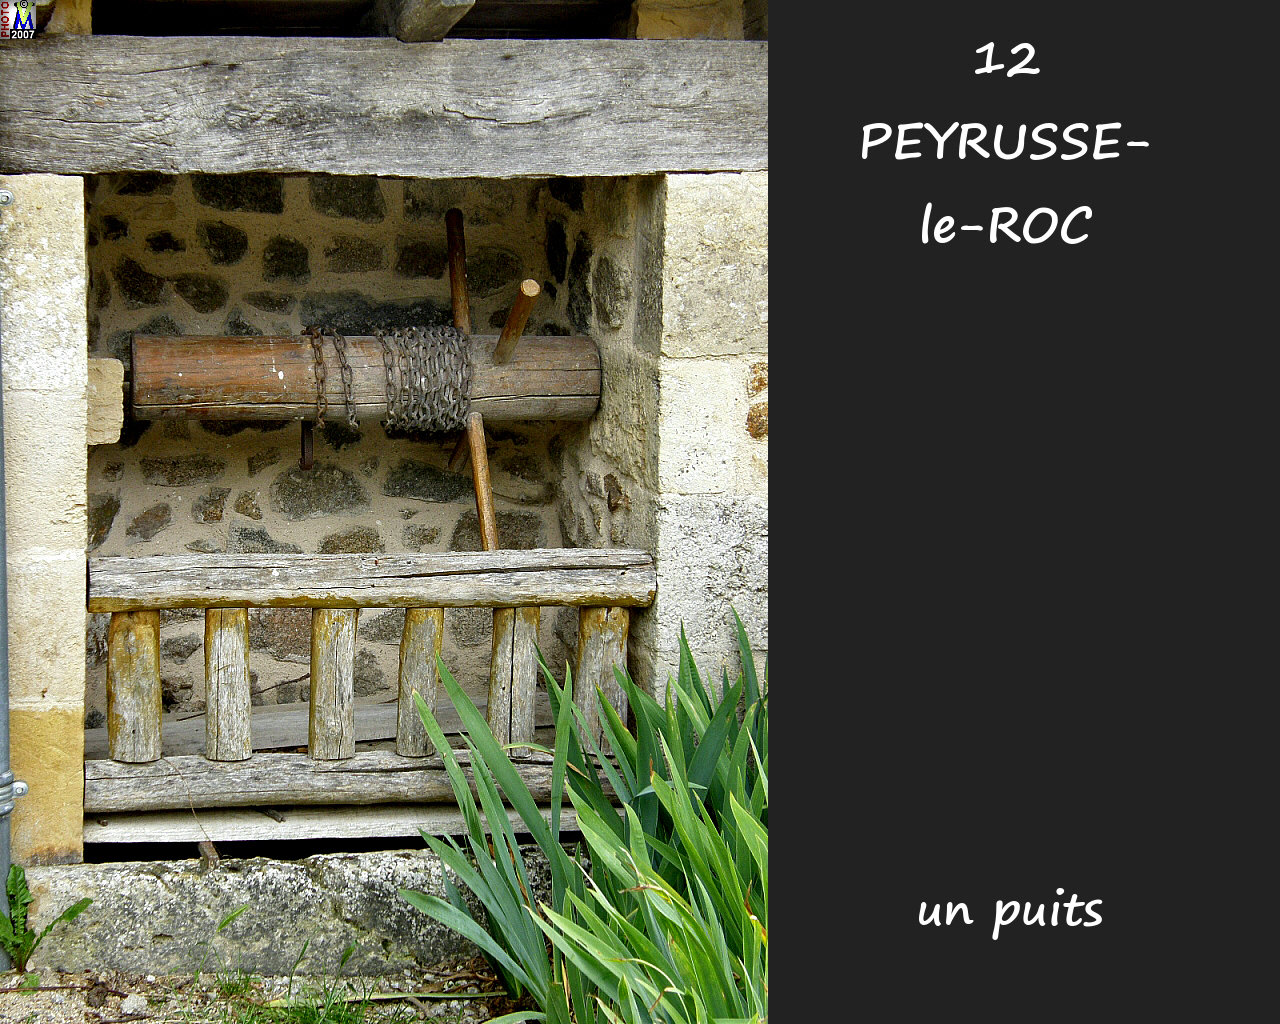 12PEYRUSSE-ROC_village-puits_100.jpg